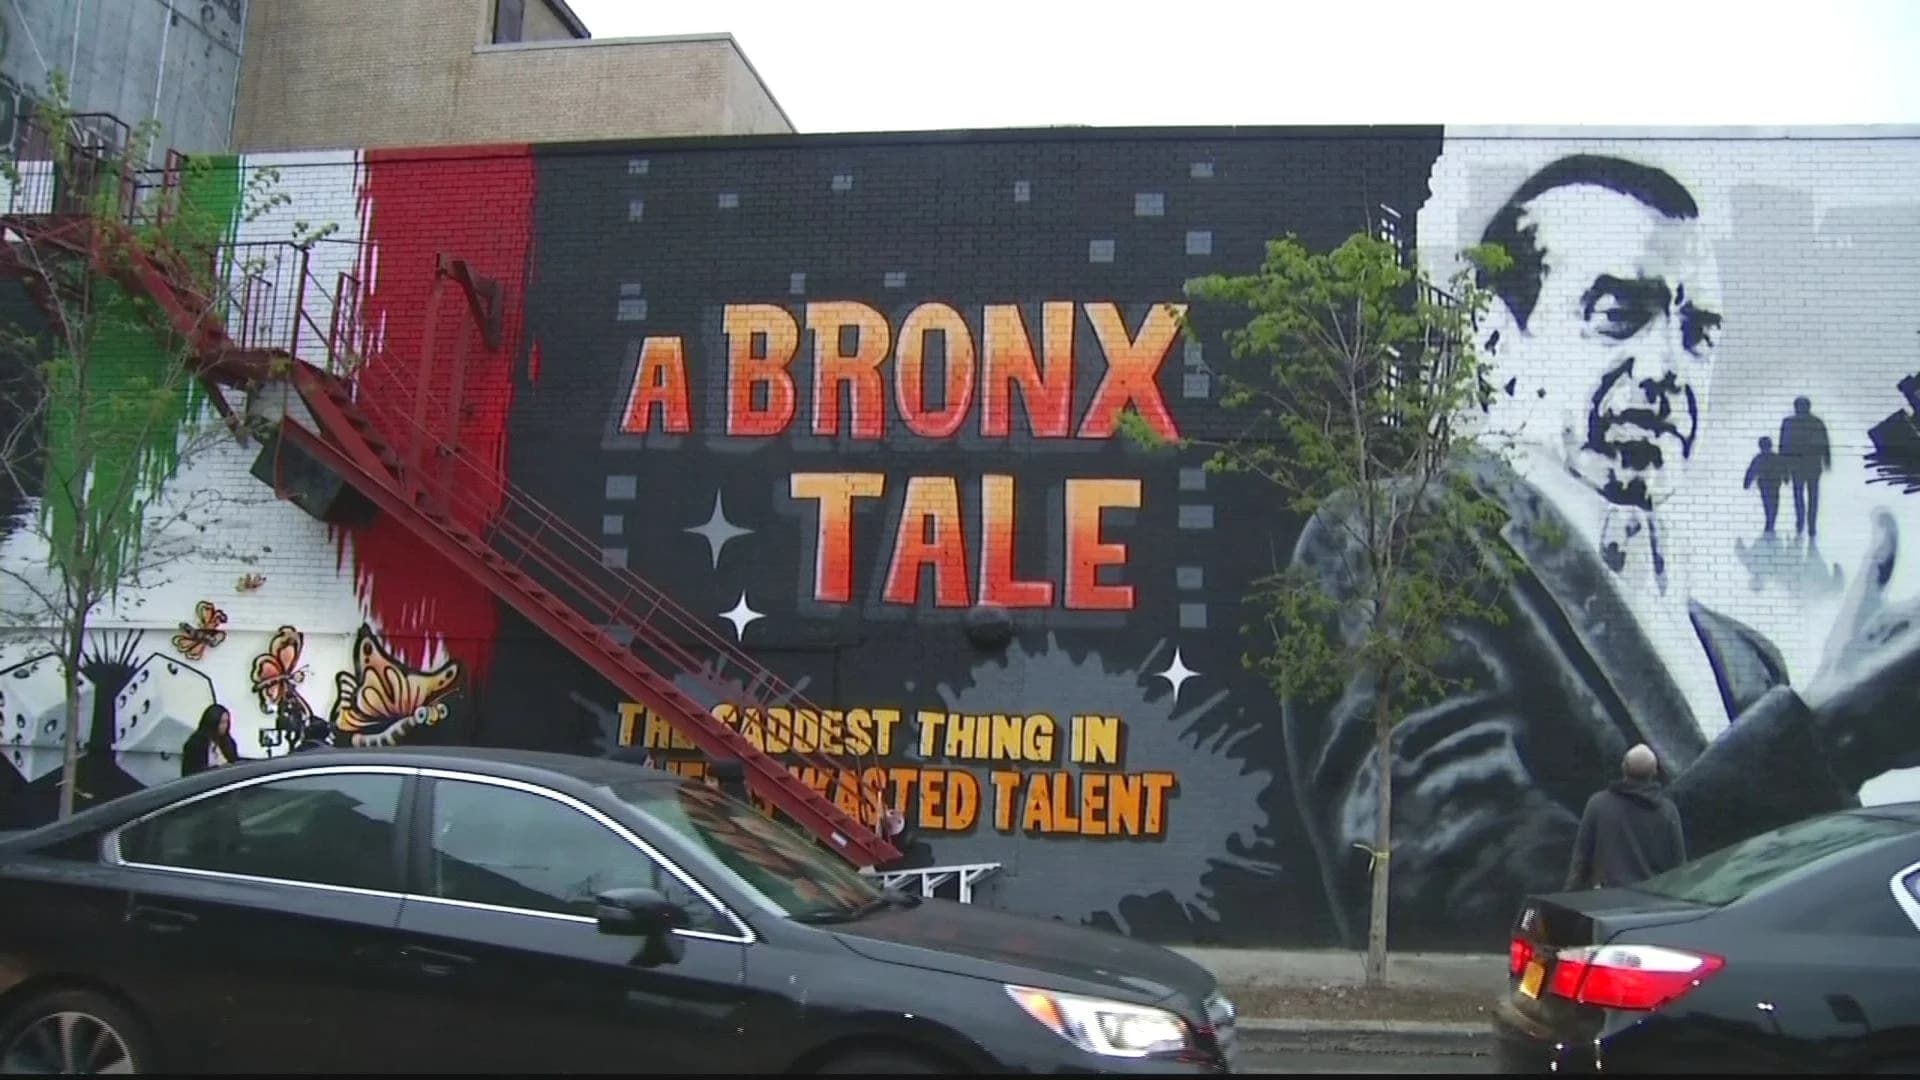 ‘Bronx Tale’ star returns to borough to examine new artwork